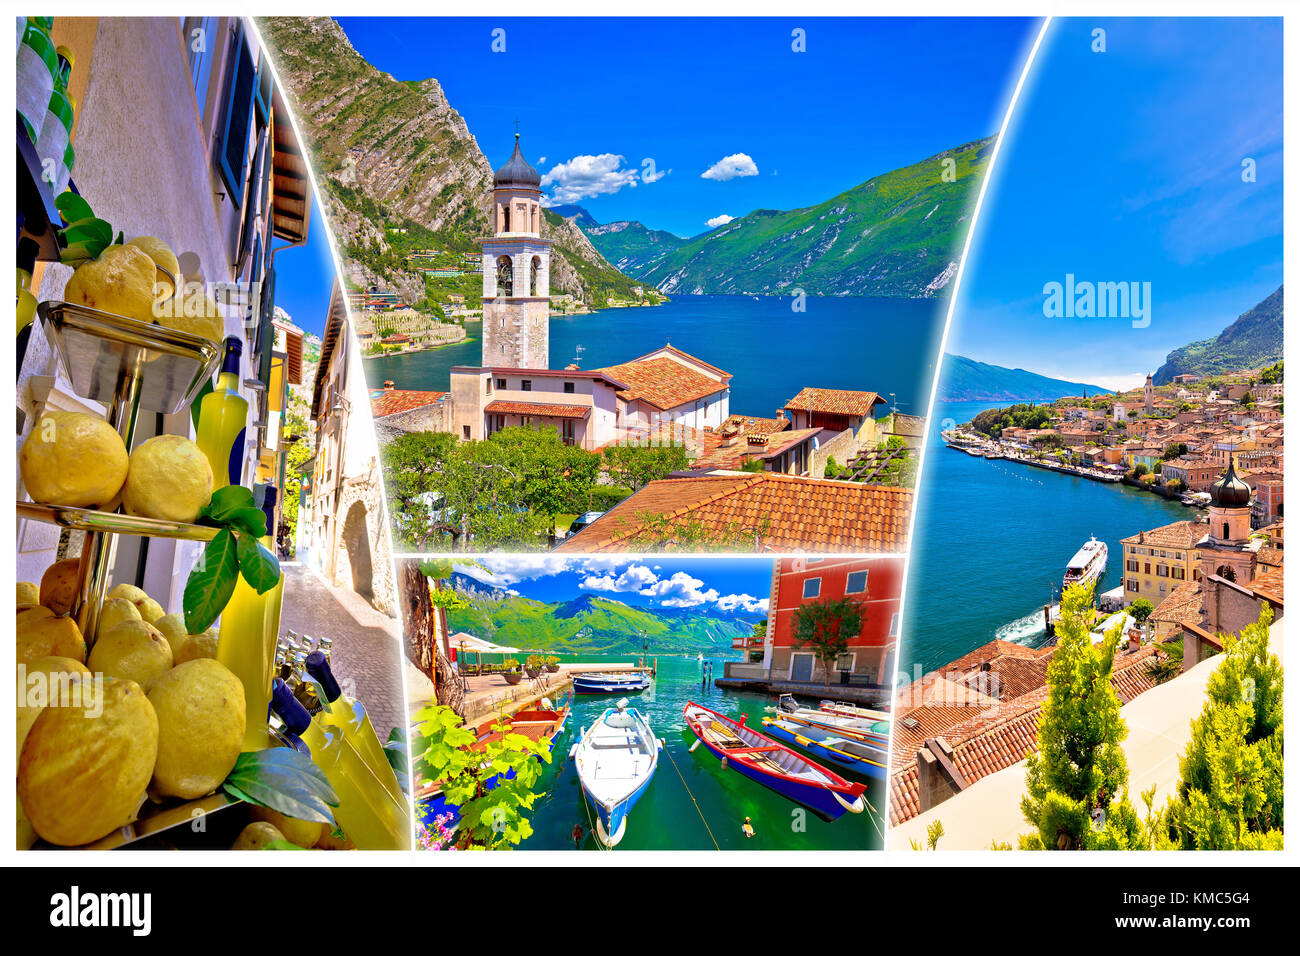 Limone Sul Garda Collage Carte Postale De Destination Touristique Lac De Garde En Lombardie Region De L Italie Photo Stock Alamy